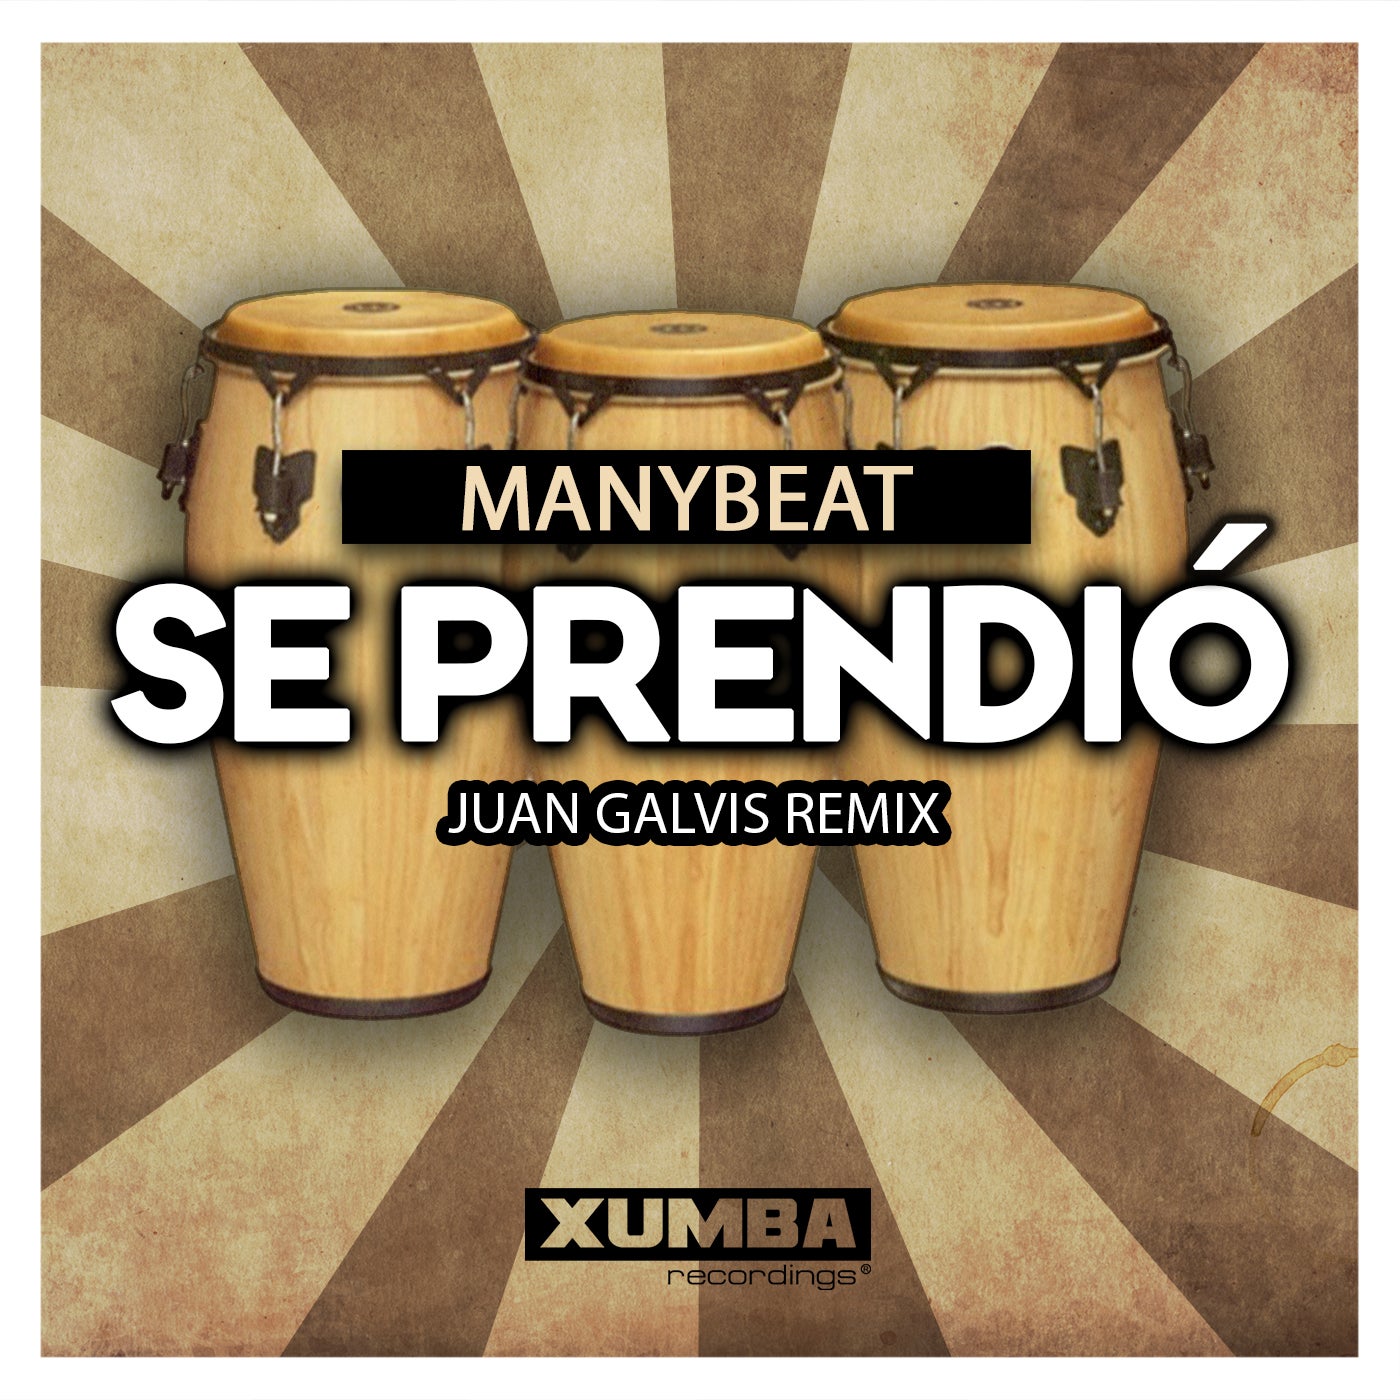 Manybeat - Se Prendio (Remix) [Xumba Recordings] | Music & Downloads on ...